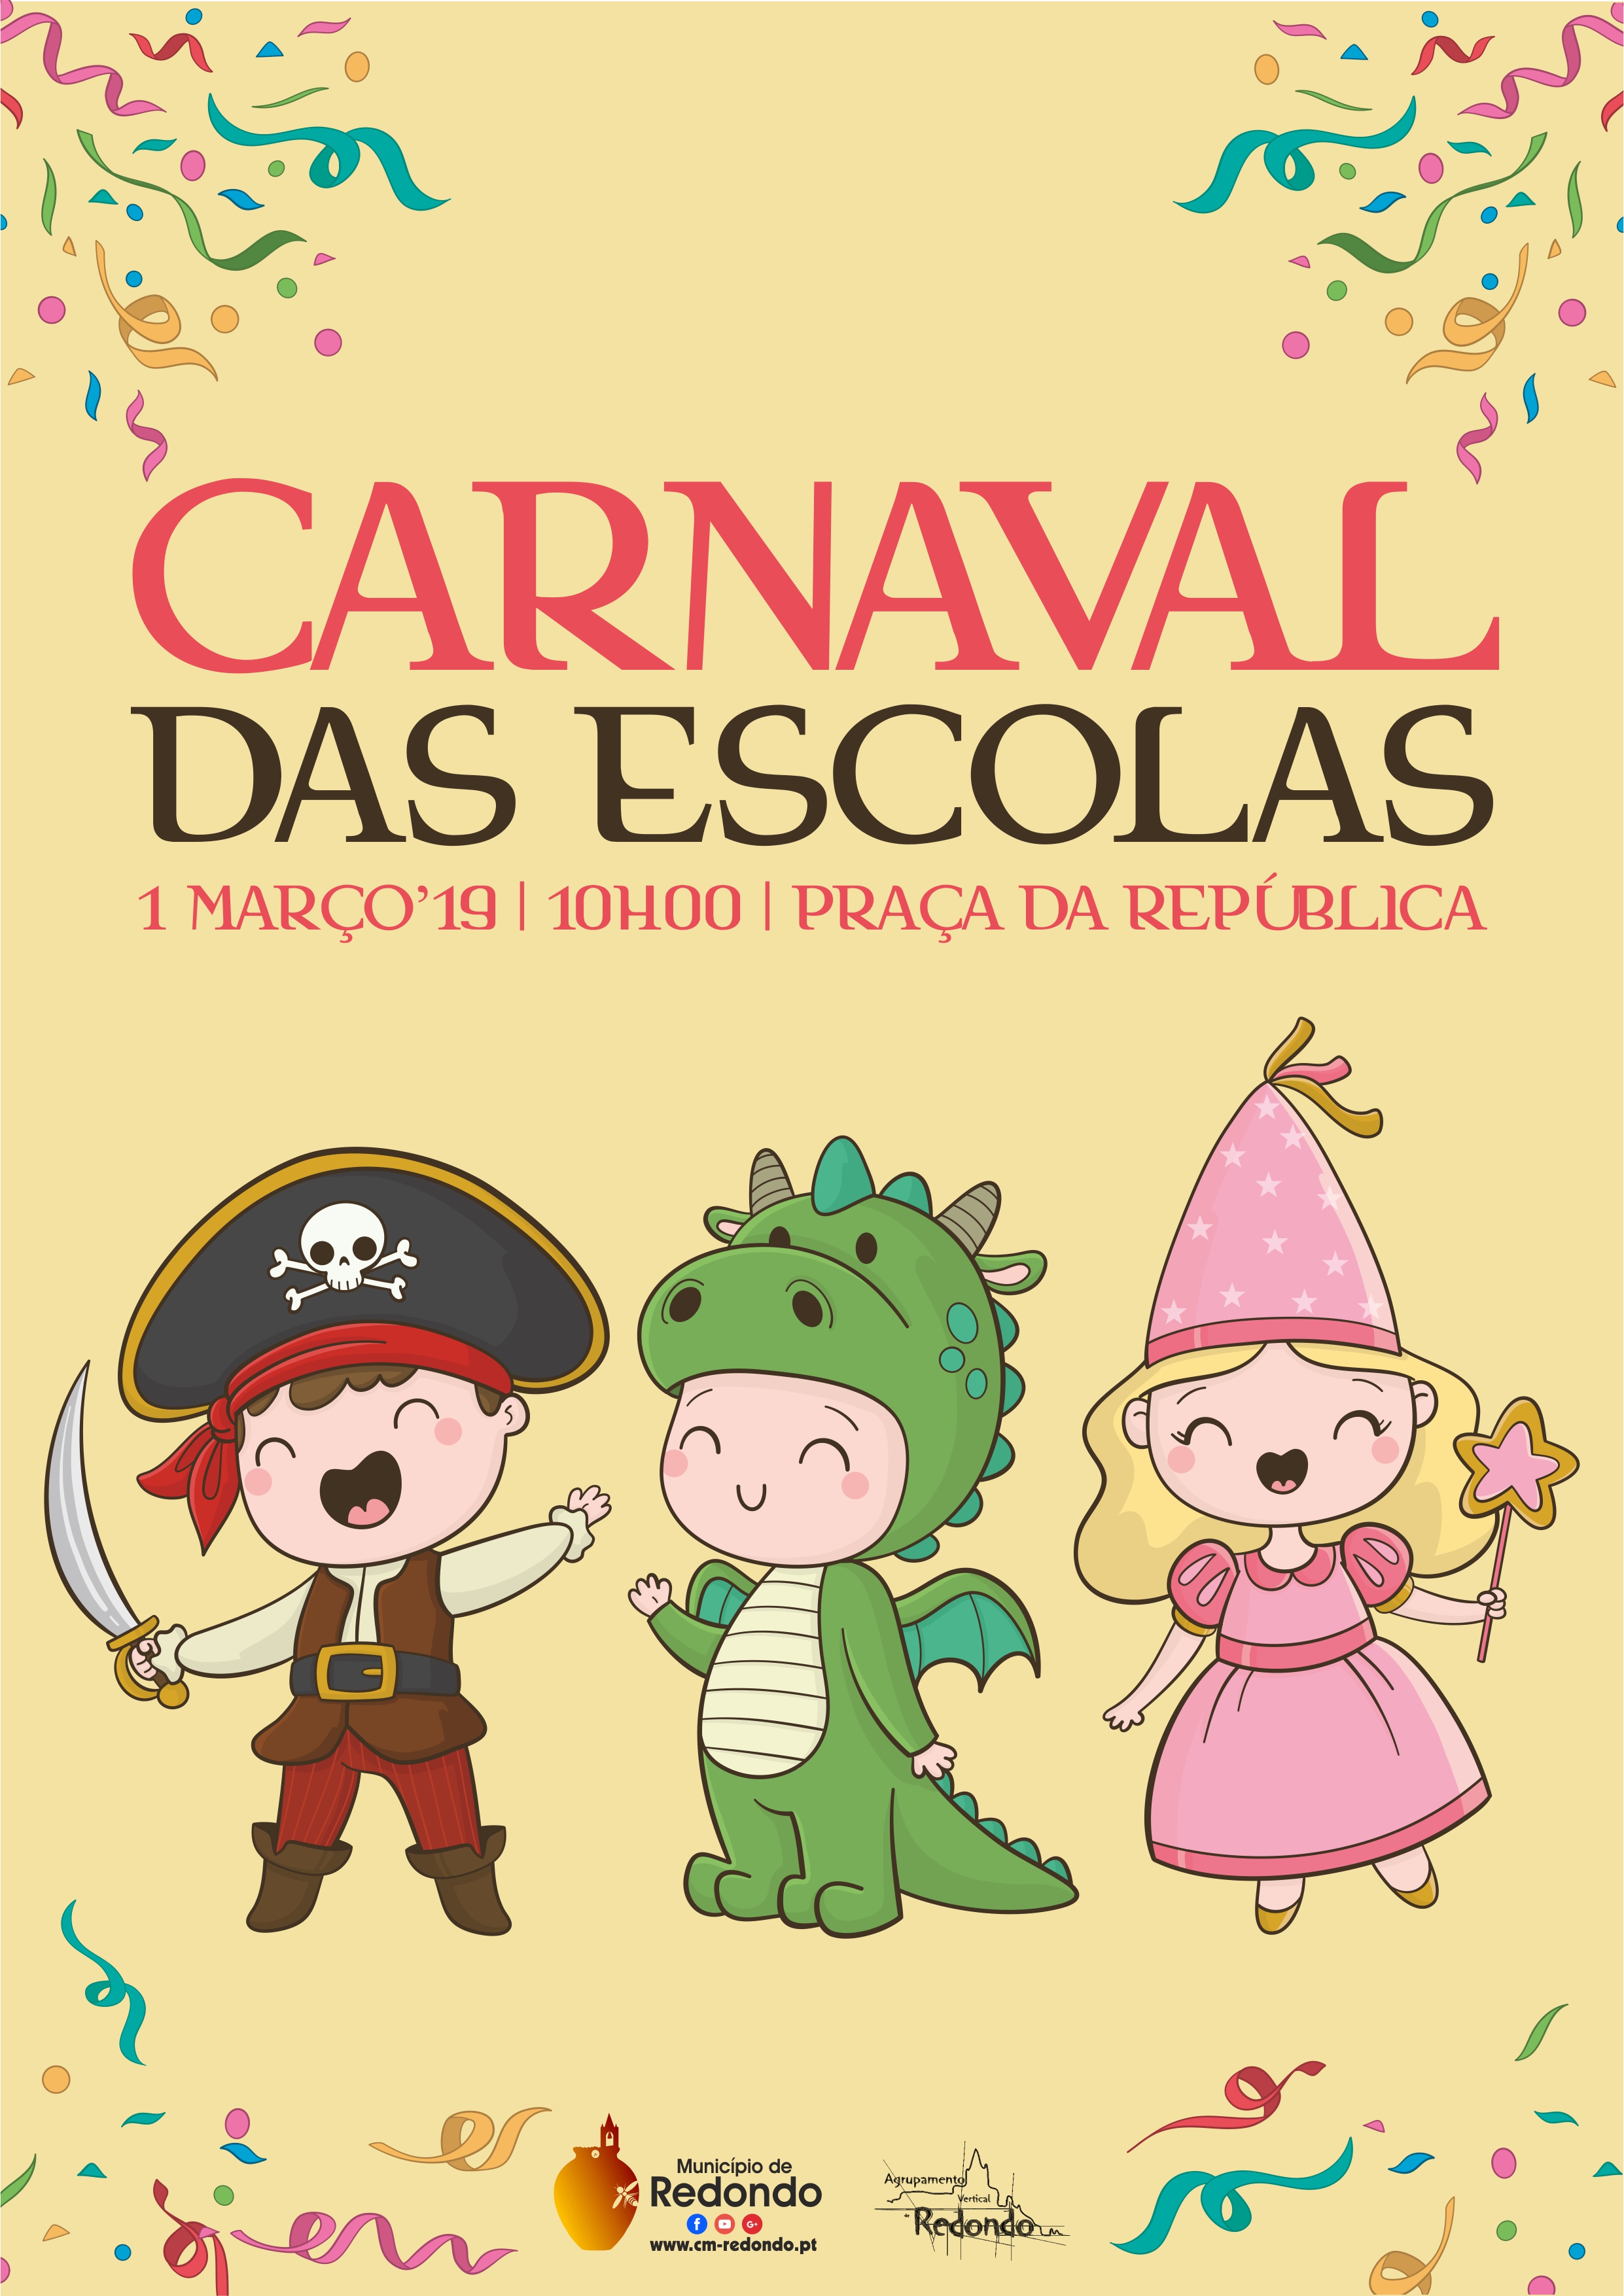 CarnavaldasEscolas_F_0_1594718183.